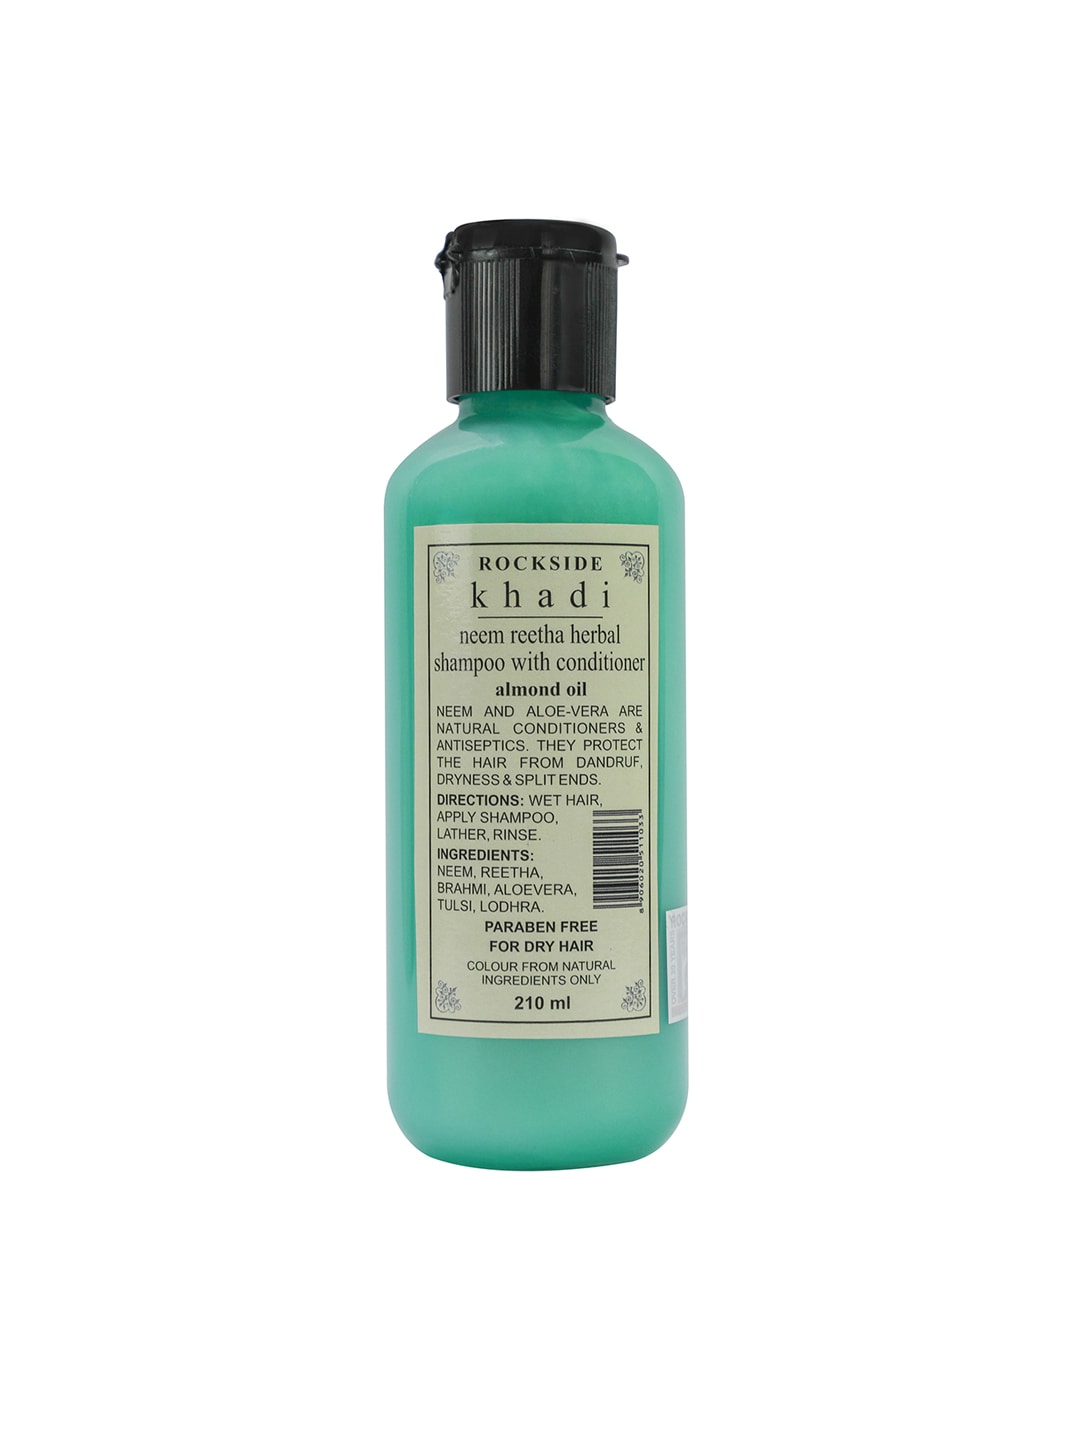 ROCKSIDE KHADI Herbal Neem Reetha Shampoo, 210 ml Price in India